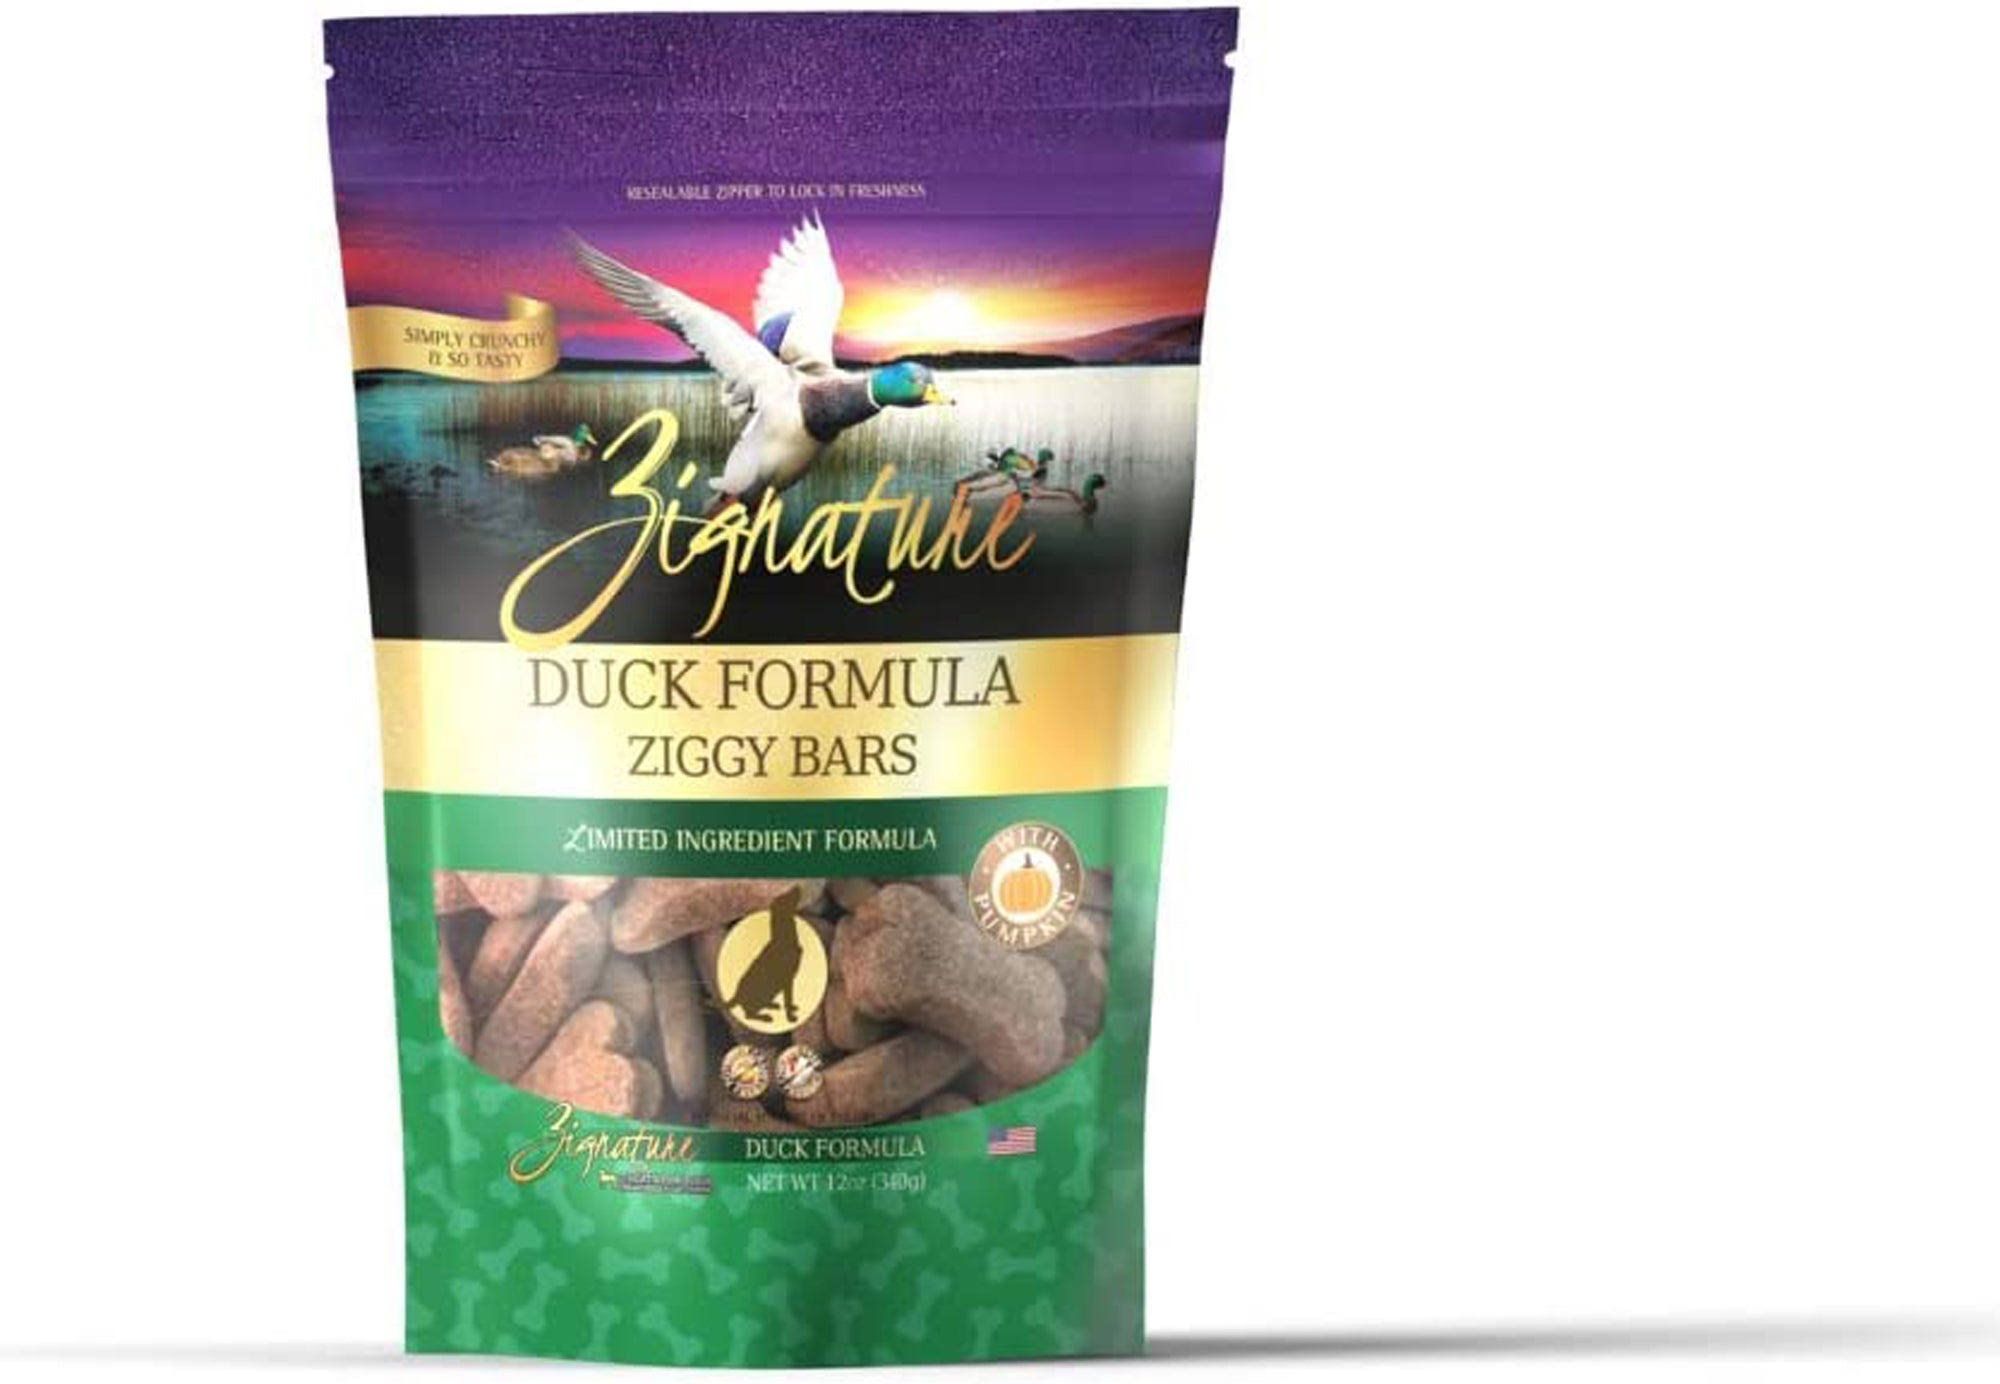 Zignature Ziggy Bars Duck Formula Dog Treats - 12 oz